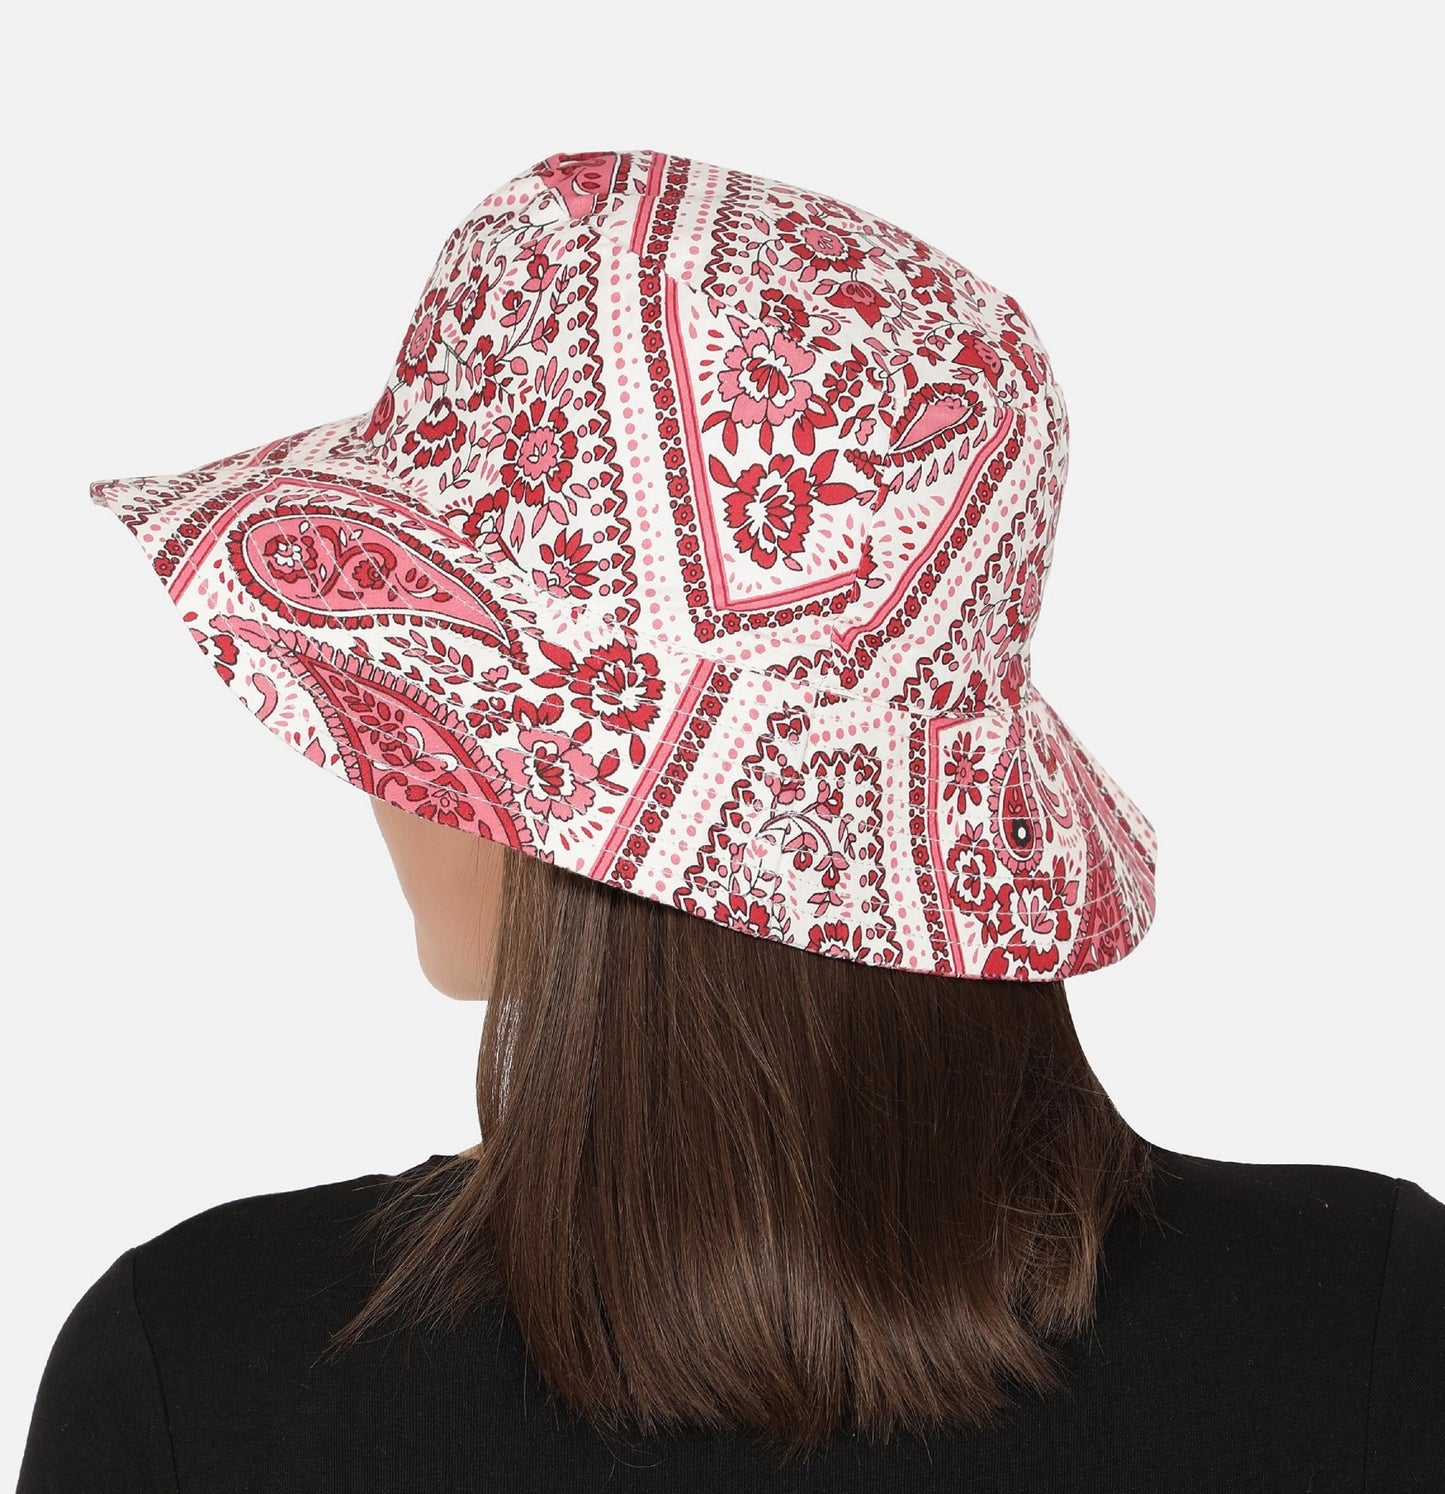 NUEVOSDAMAS Women Cotton Floral Printed Sun Hat